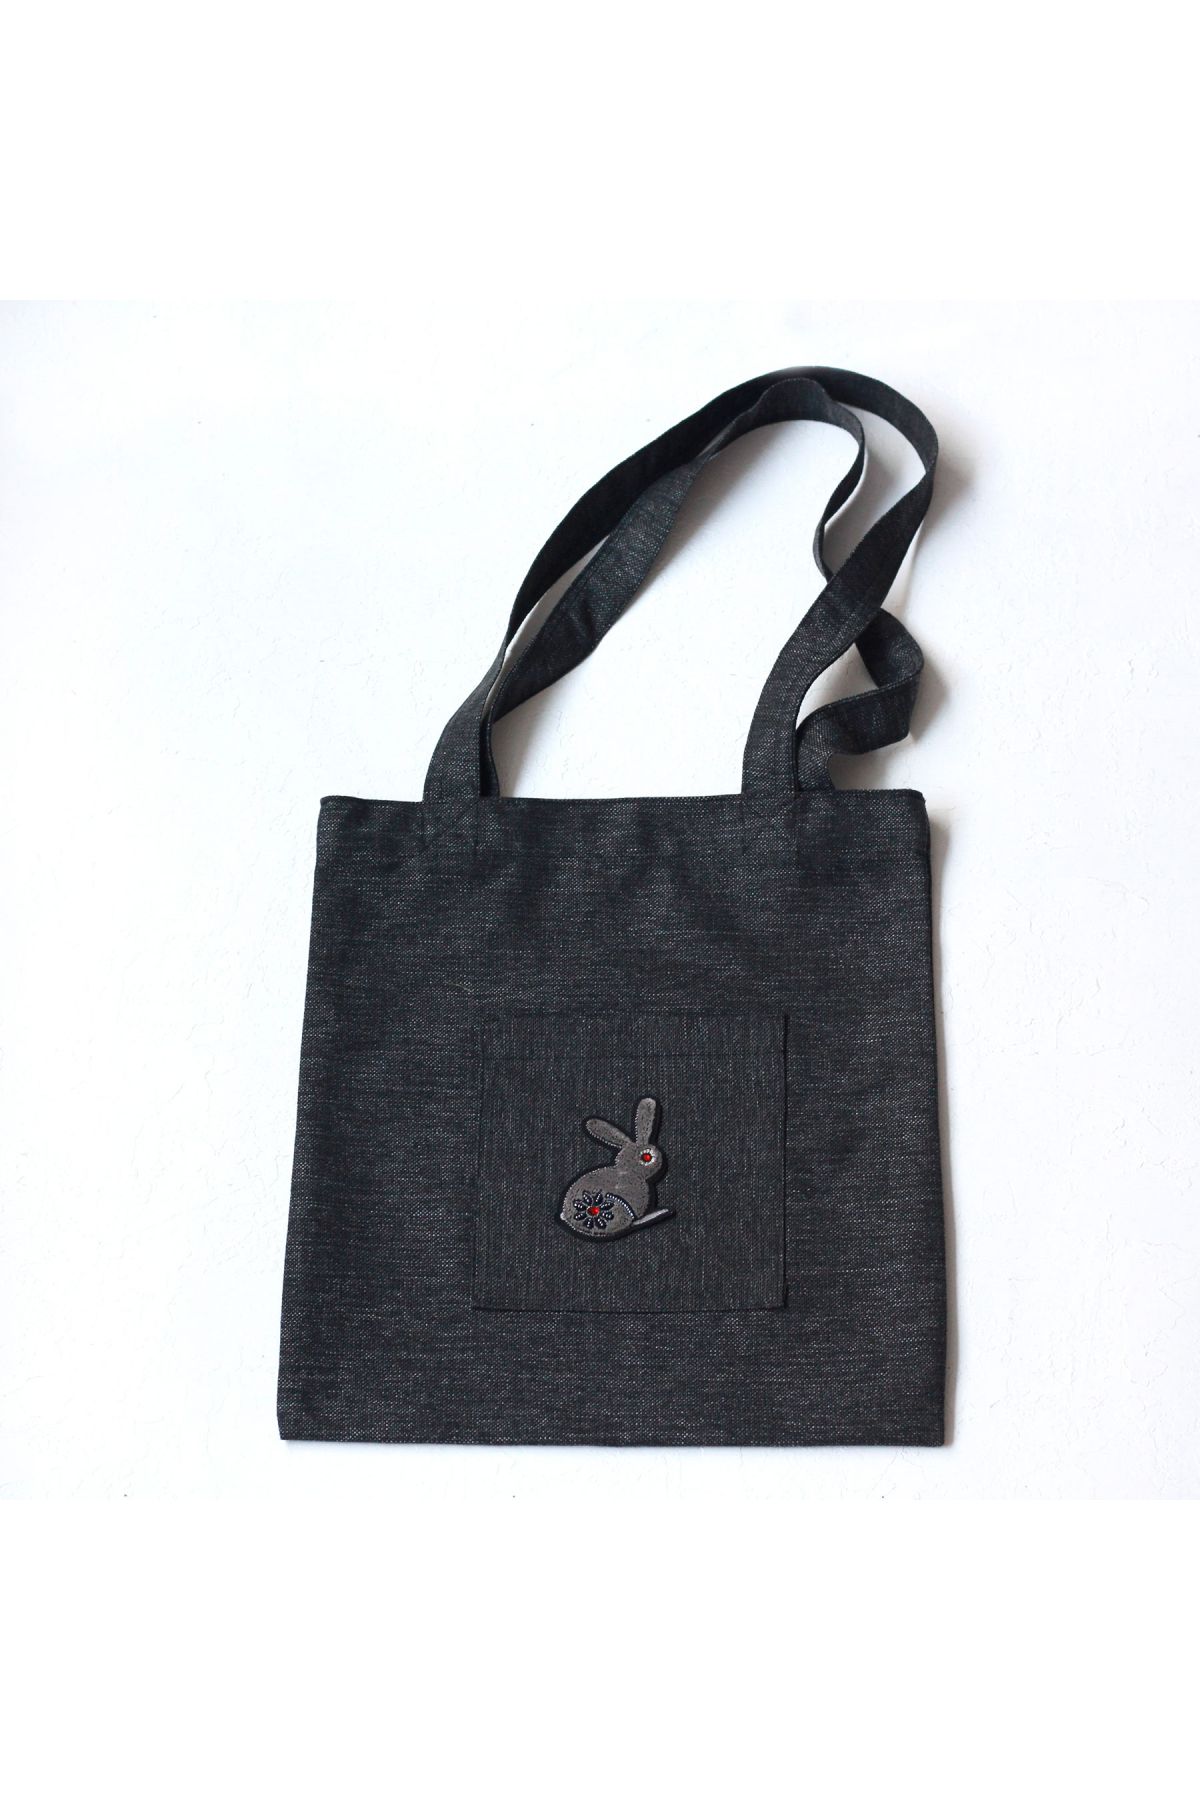 Bimotif Rabbit, Siyah Poly-keten Kumaş Çanta, 35x40 Cm